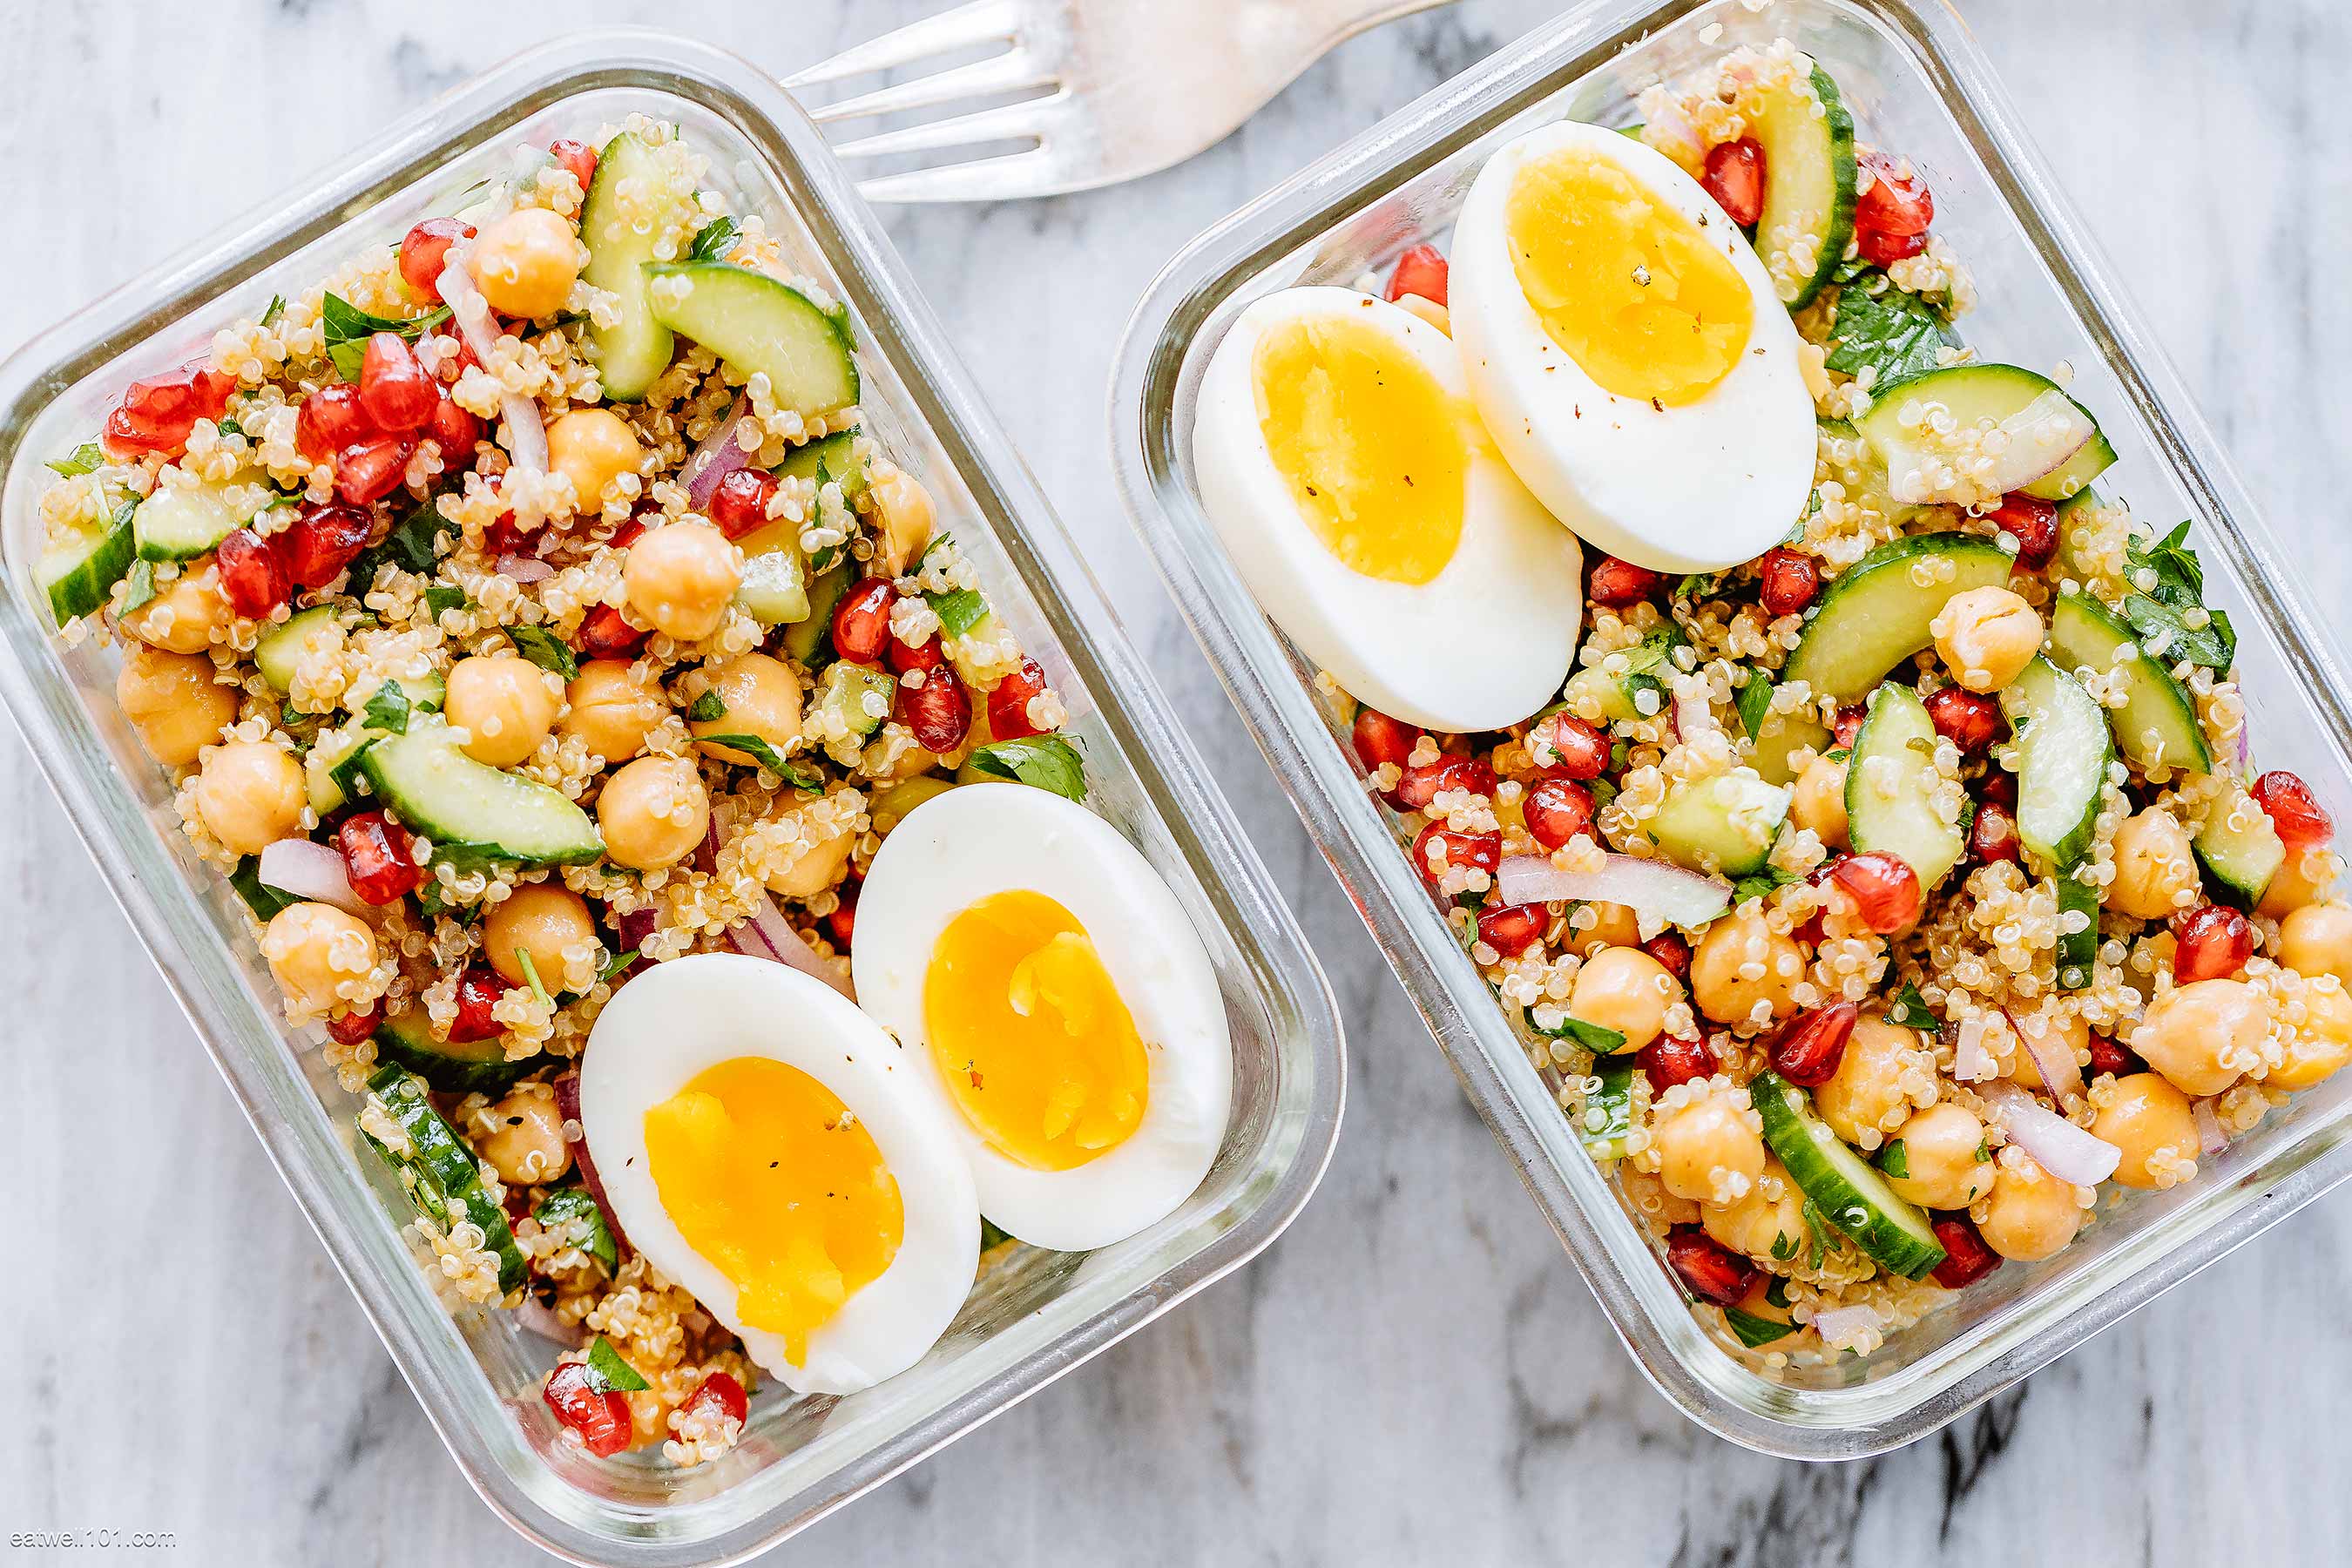 https://www.eatwell101.com/wp-content/uploads/2020/01/Chickpea-Quinoa-Salad-Meal-Prep-recipe.jpg